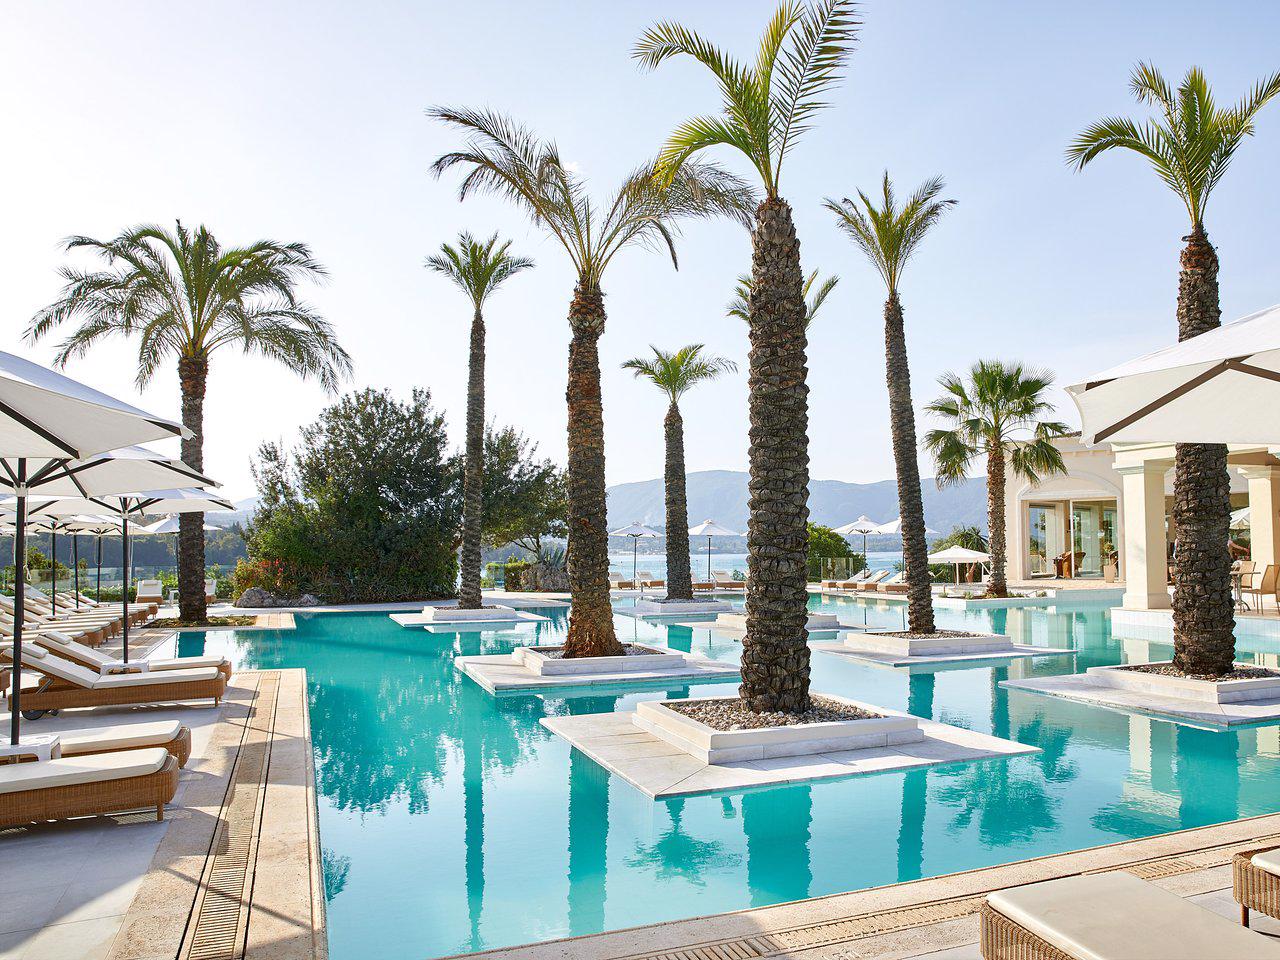 GRECOTEL Eva Palace Resort - Kommeno - Griekenland